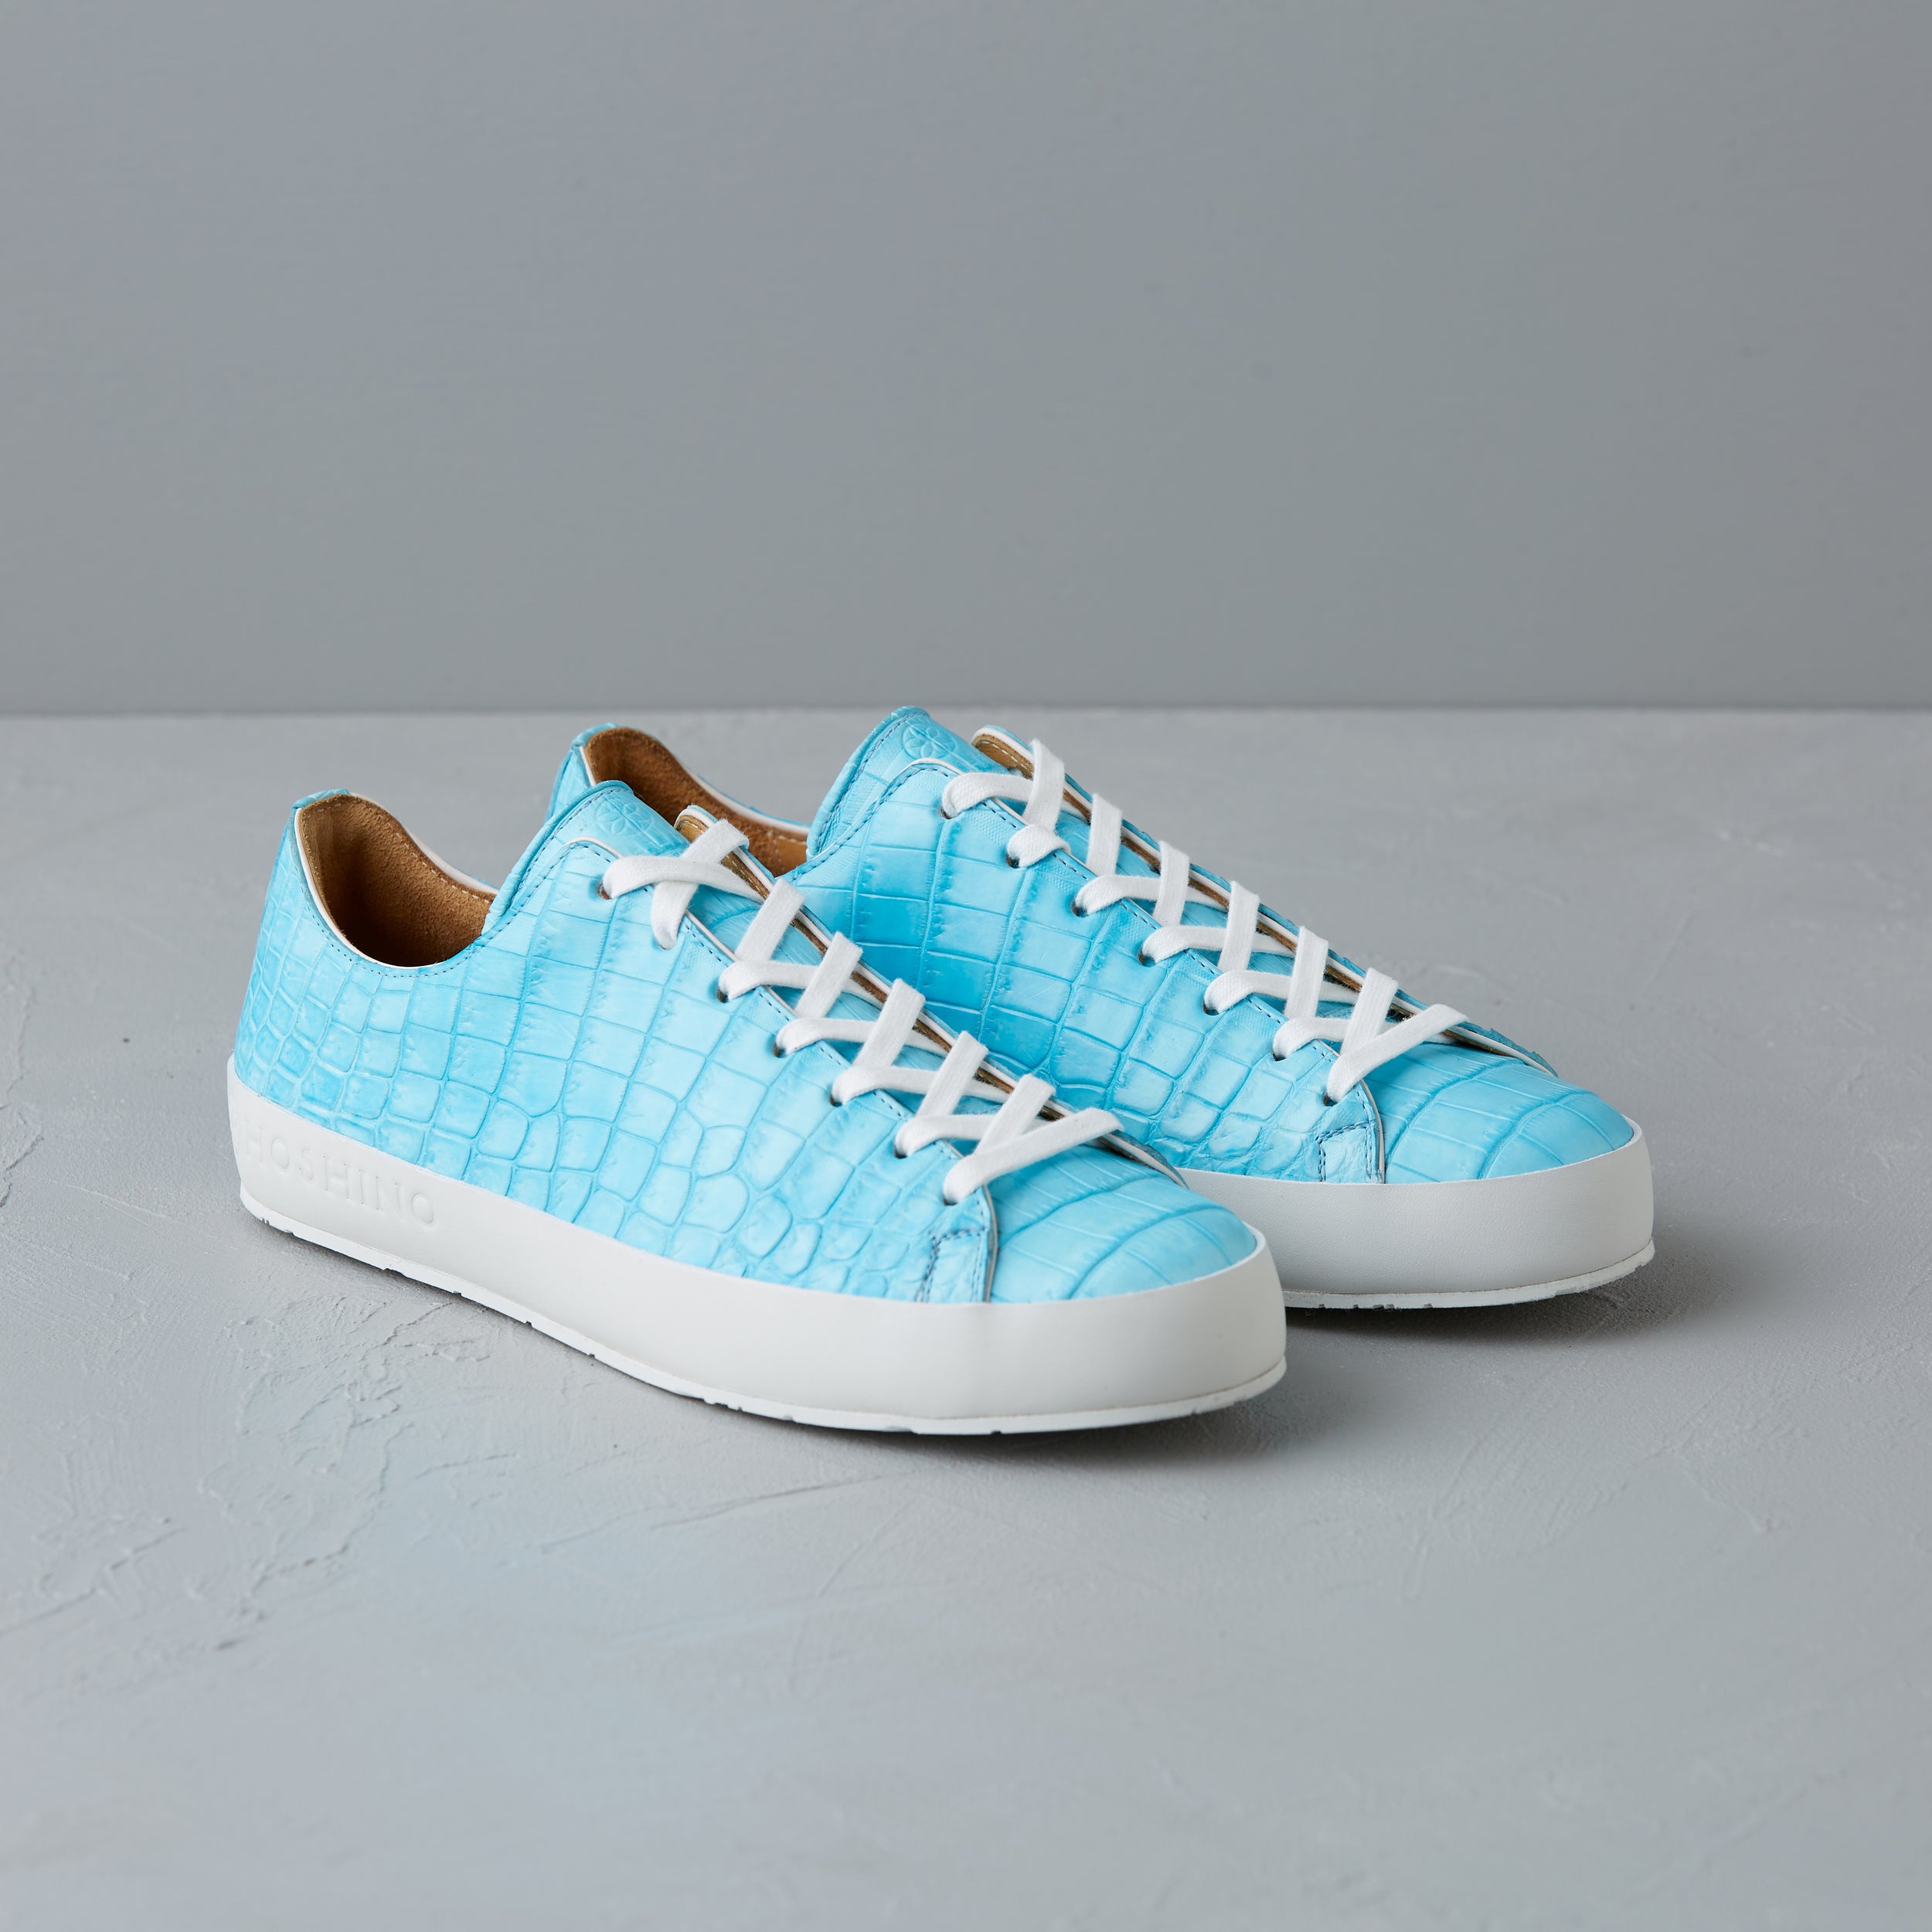 [women's] Liberte - low-top sneakers - Tiffany blue patina crocodile